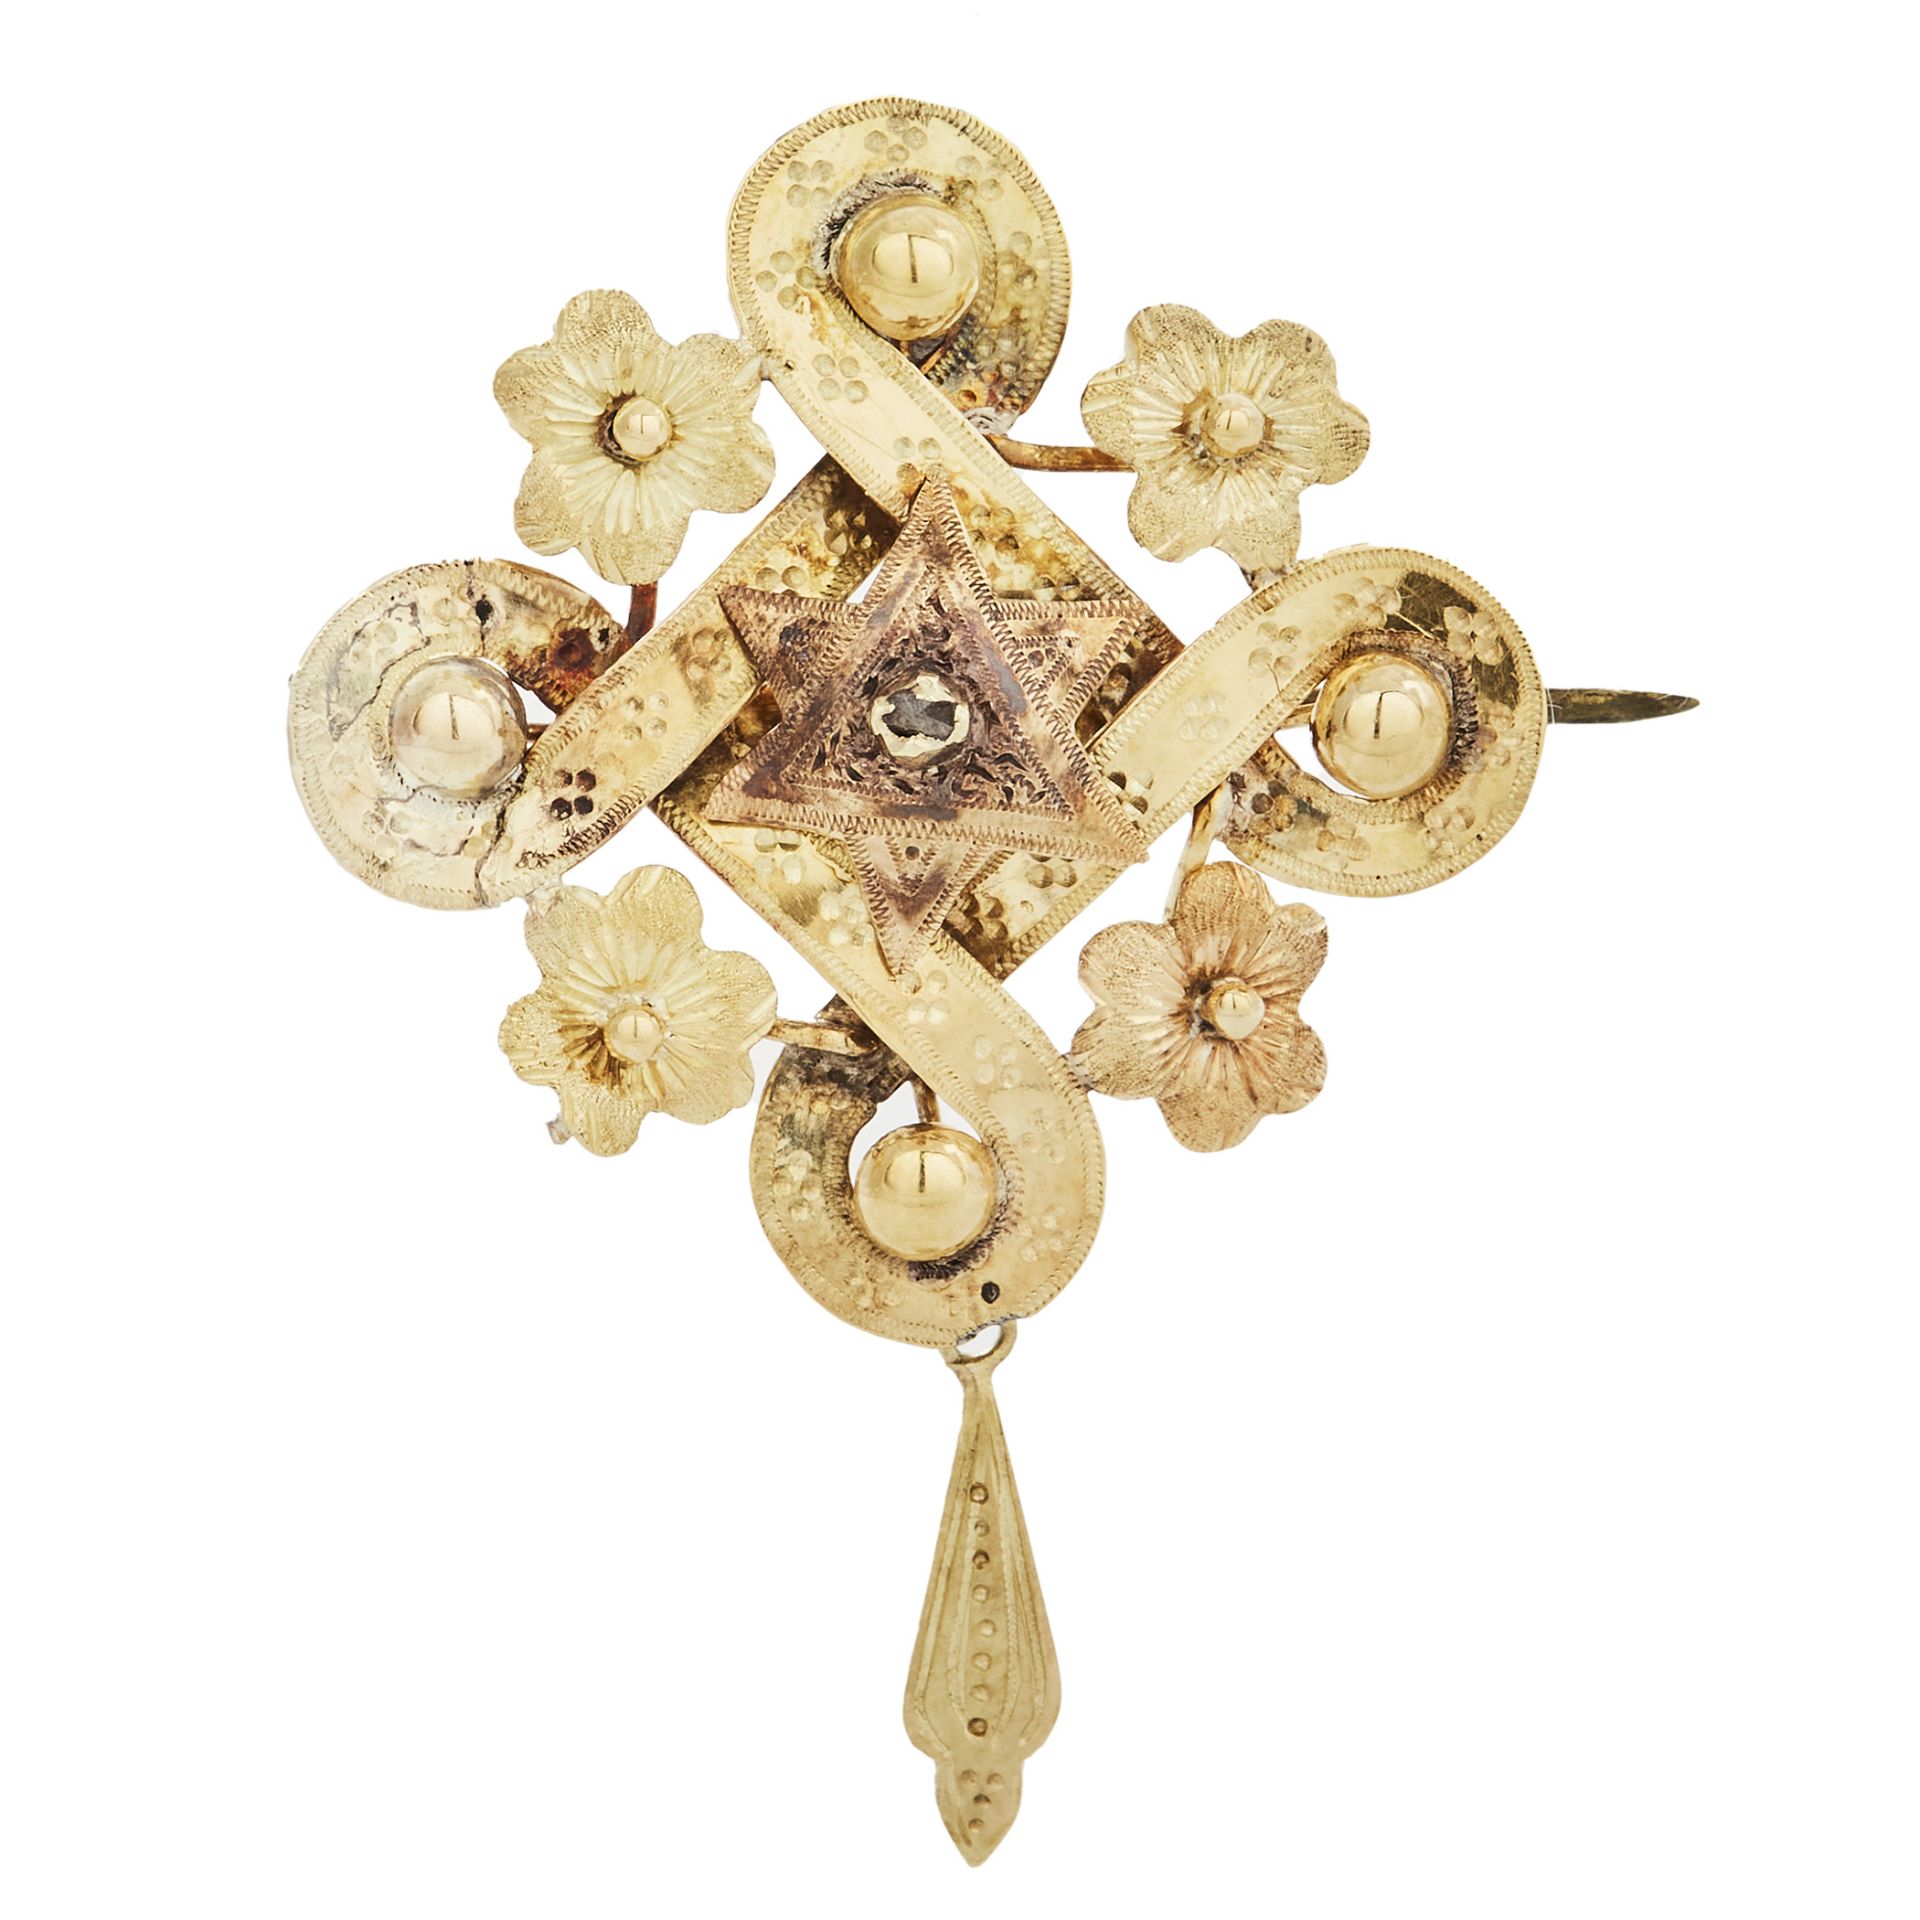 Alphonsine gold and dismonds brooch, late 19th century.